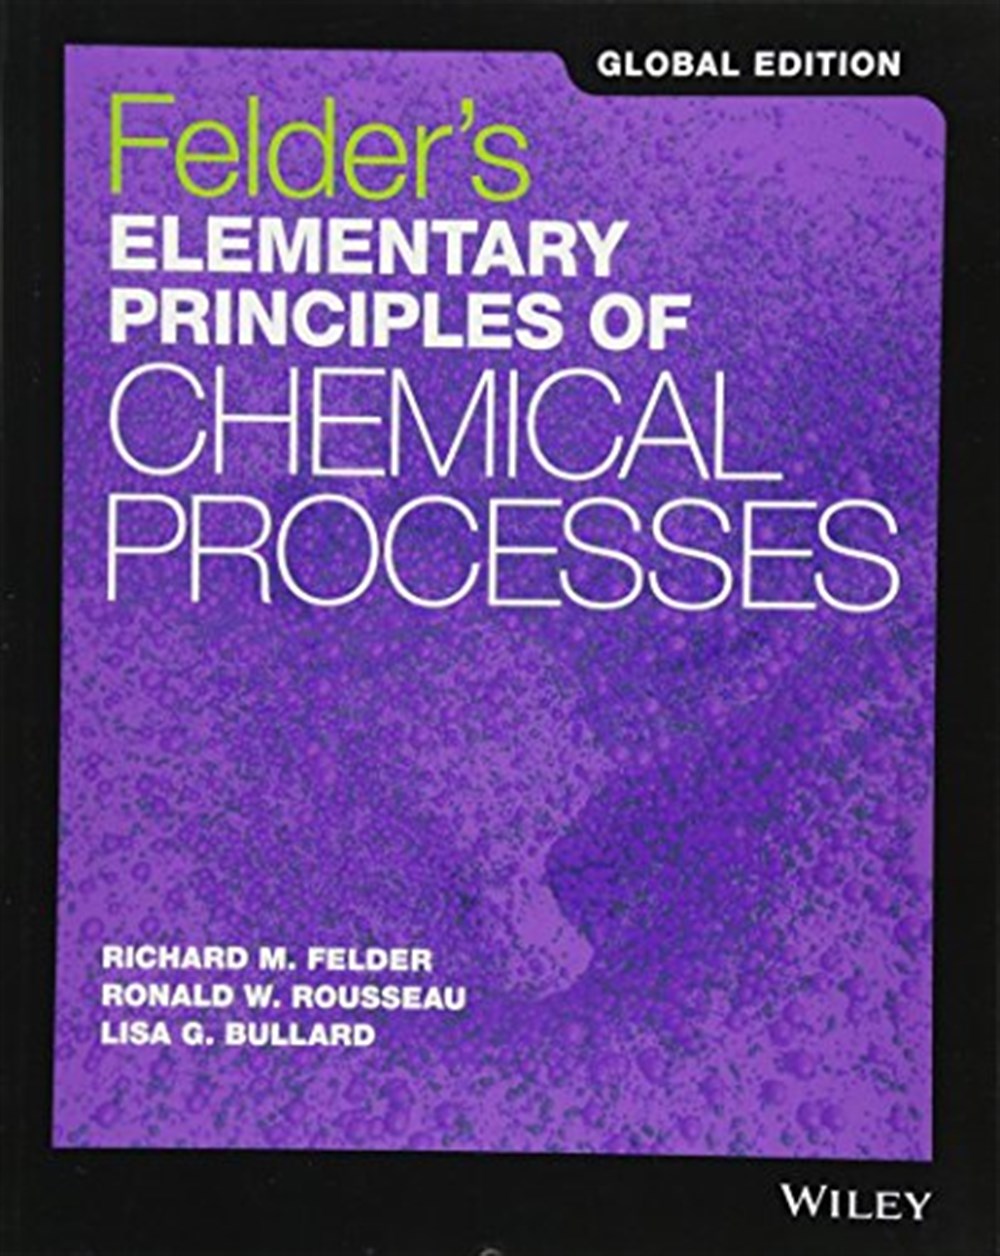 Felders Elementary Principles of Chemical Processes